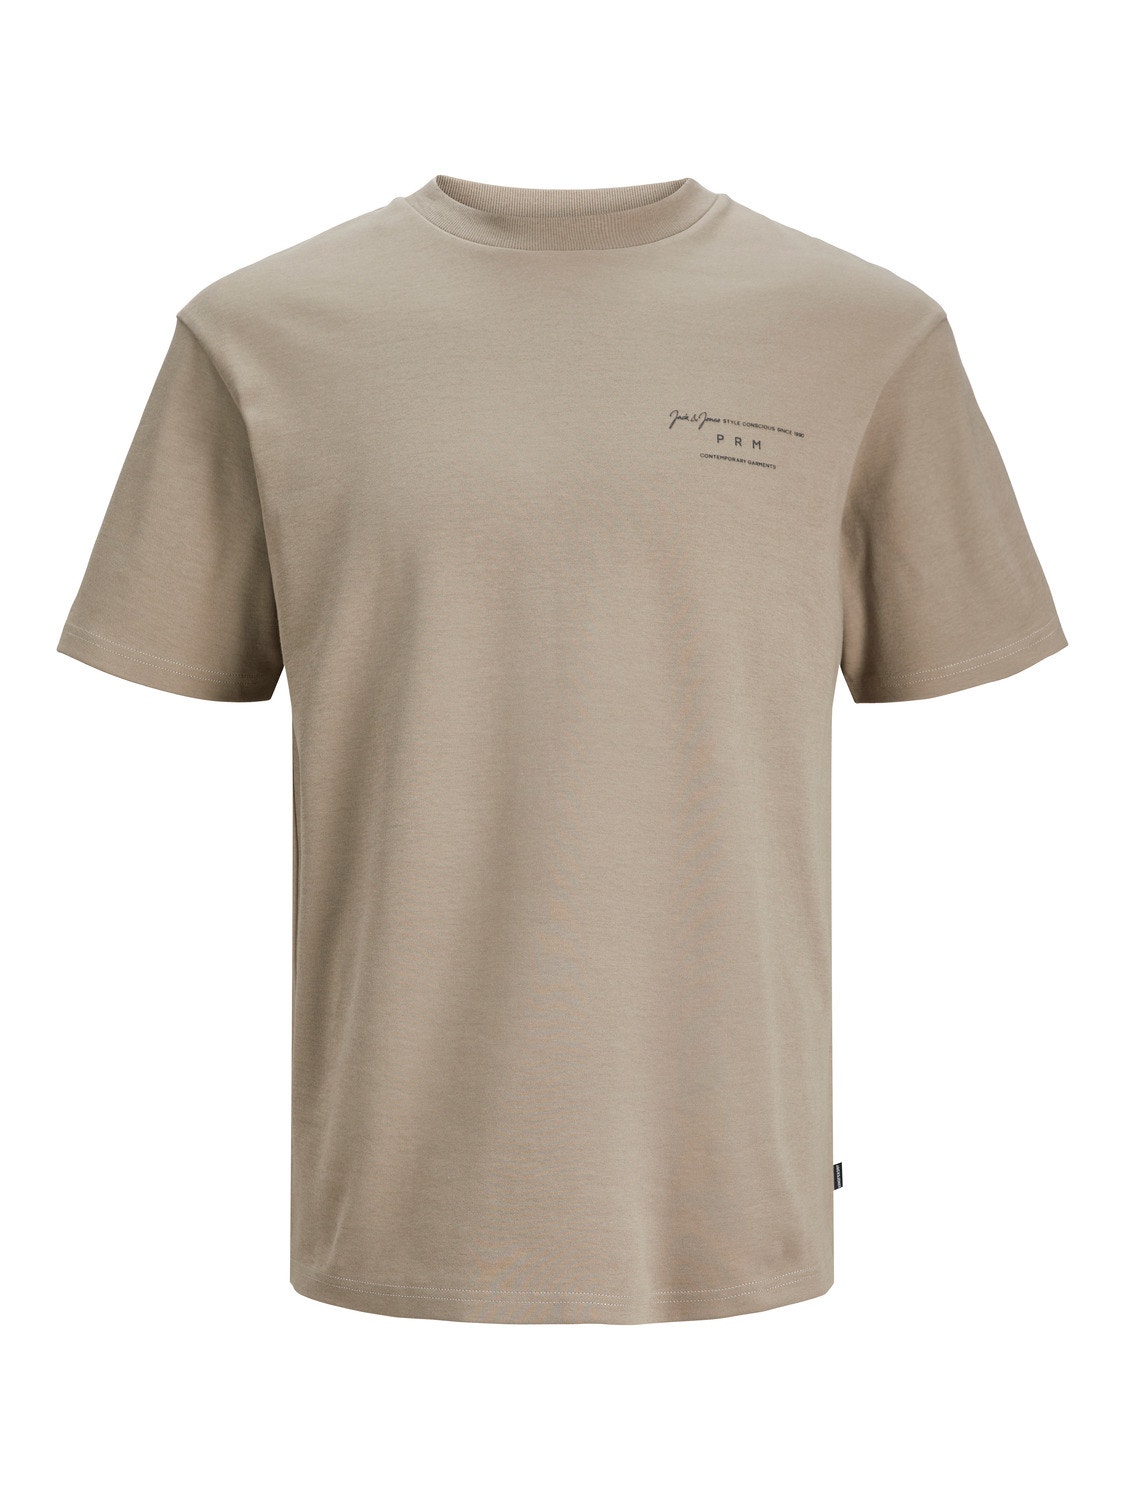 Jack & Jones Printed Crew neck T-shirt -Brindle - 12245400